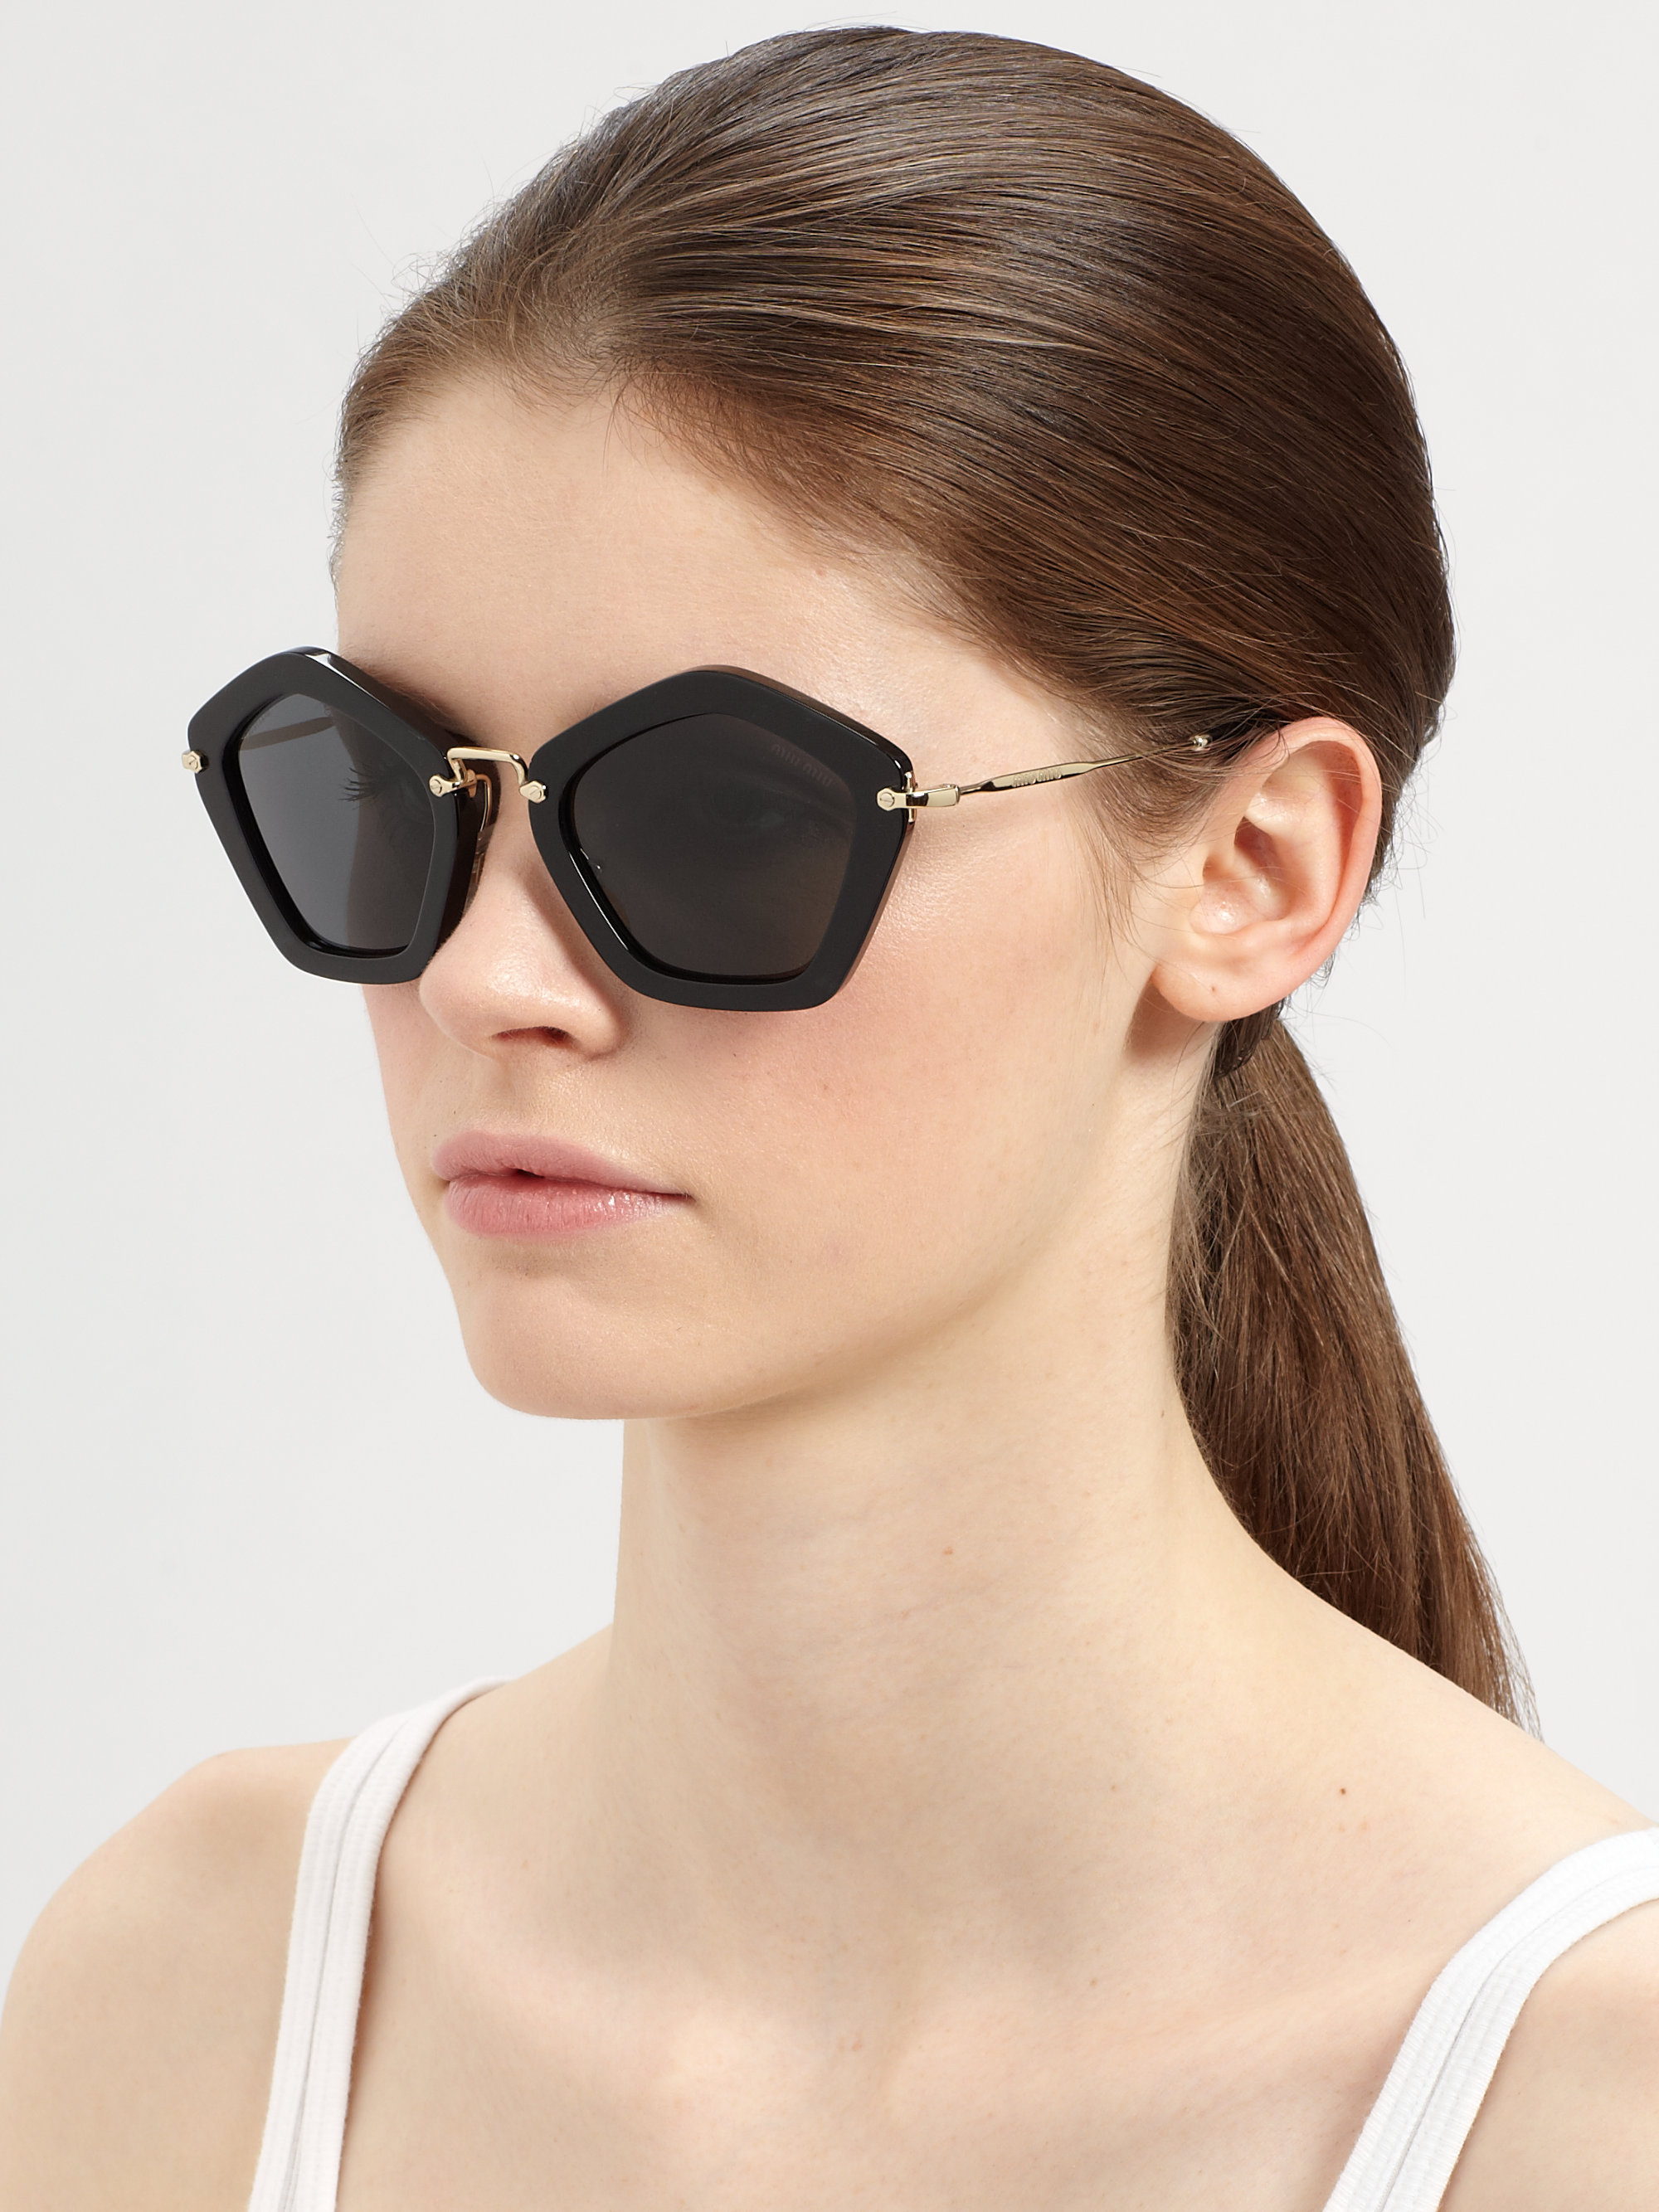 Lyst - Miu Miu Extreme Star Sunglasses in Black